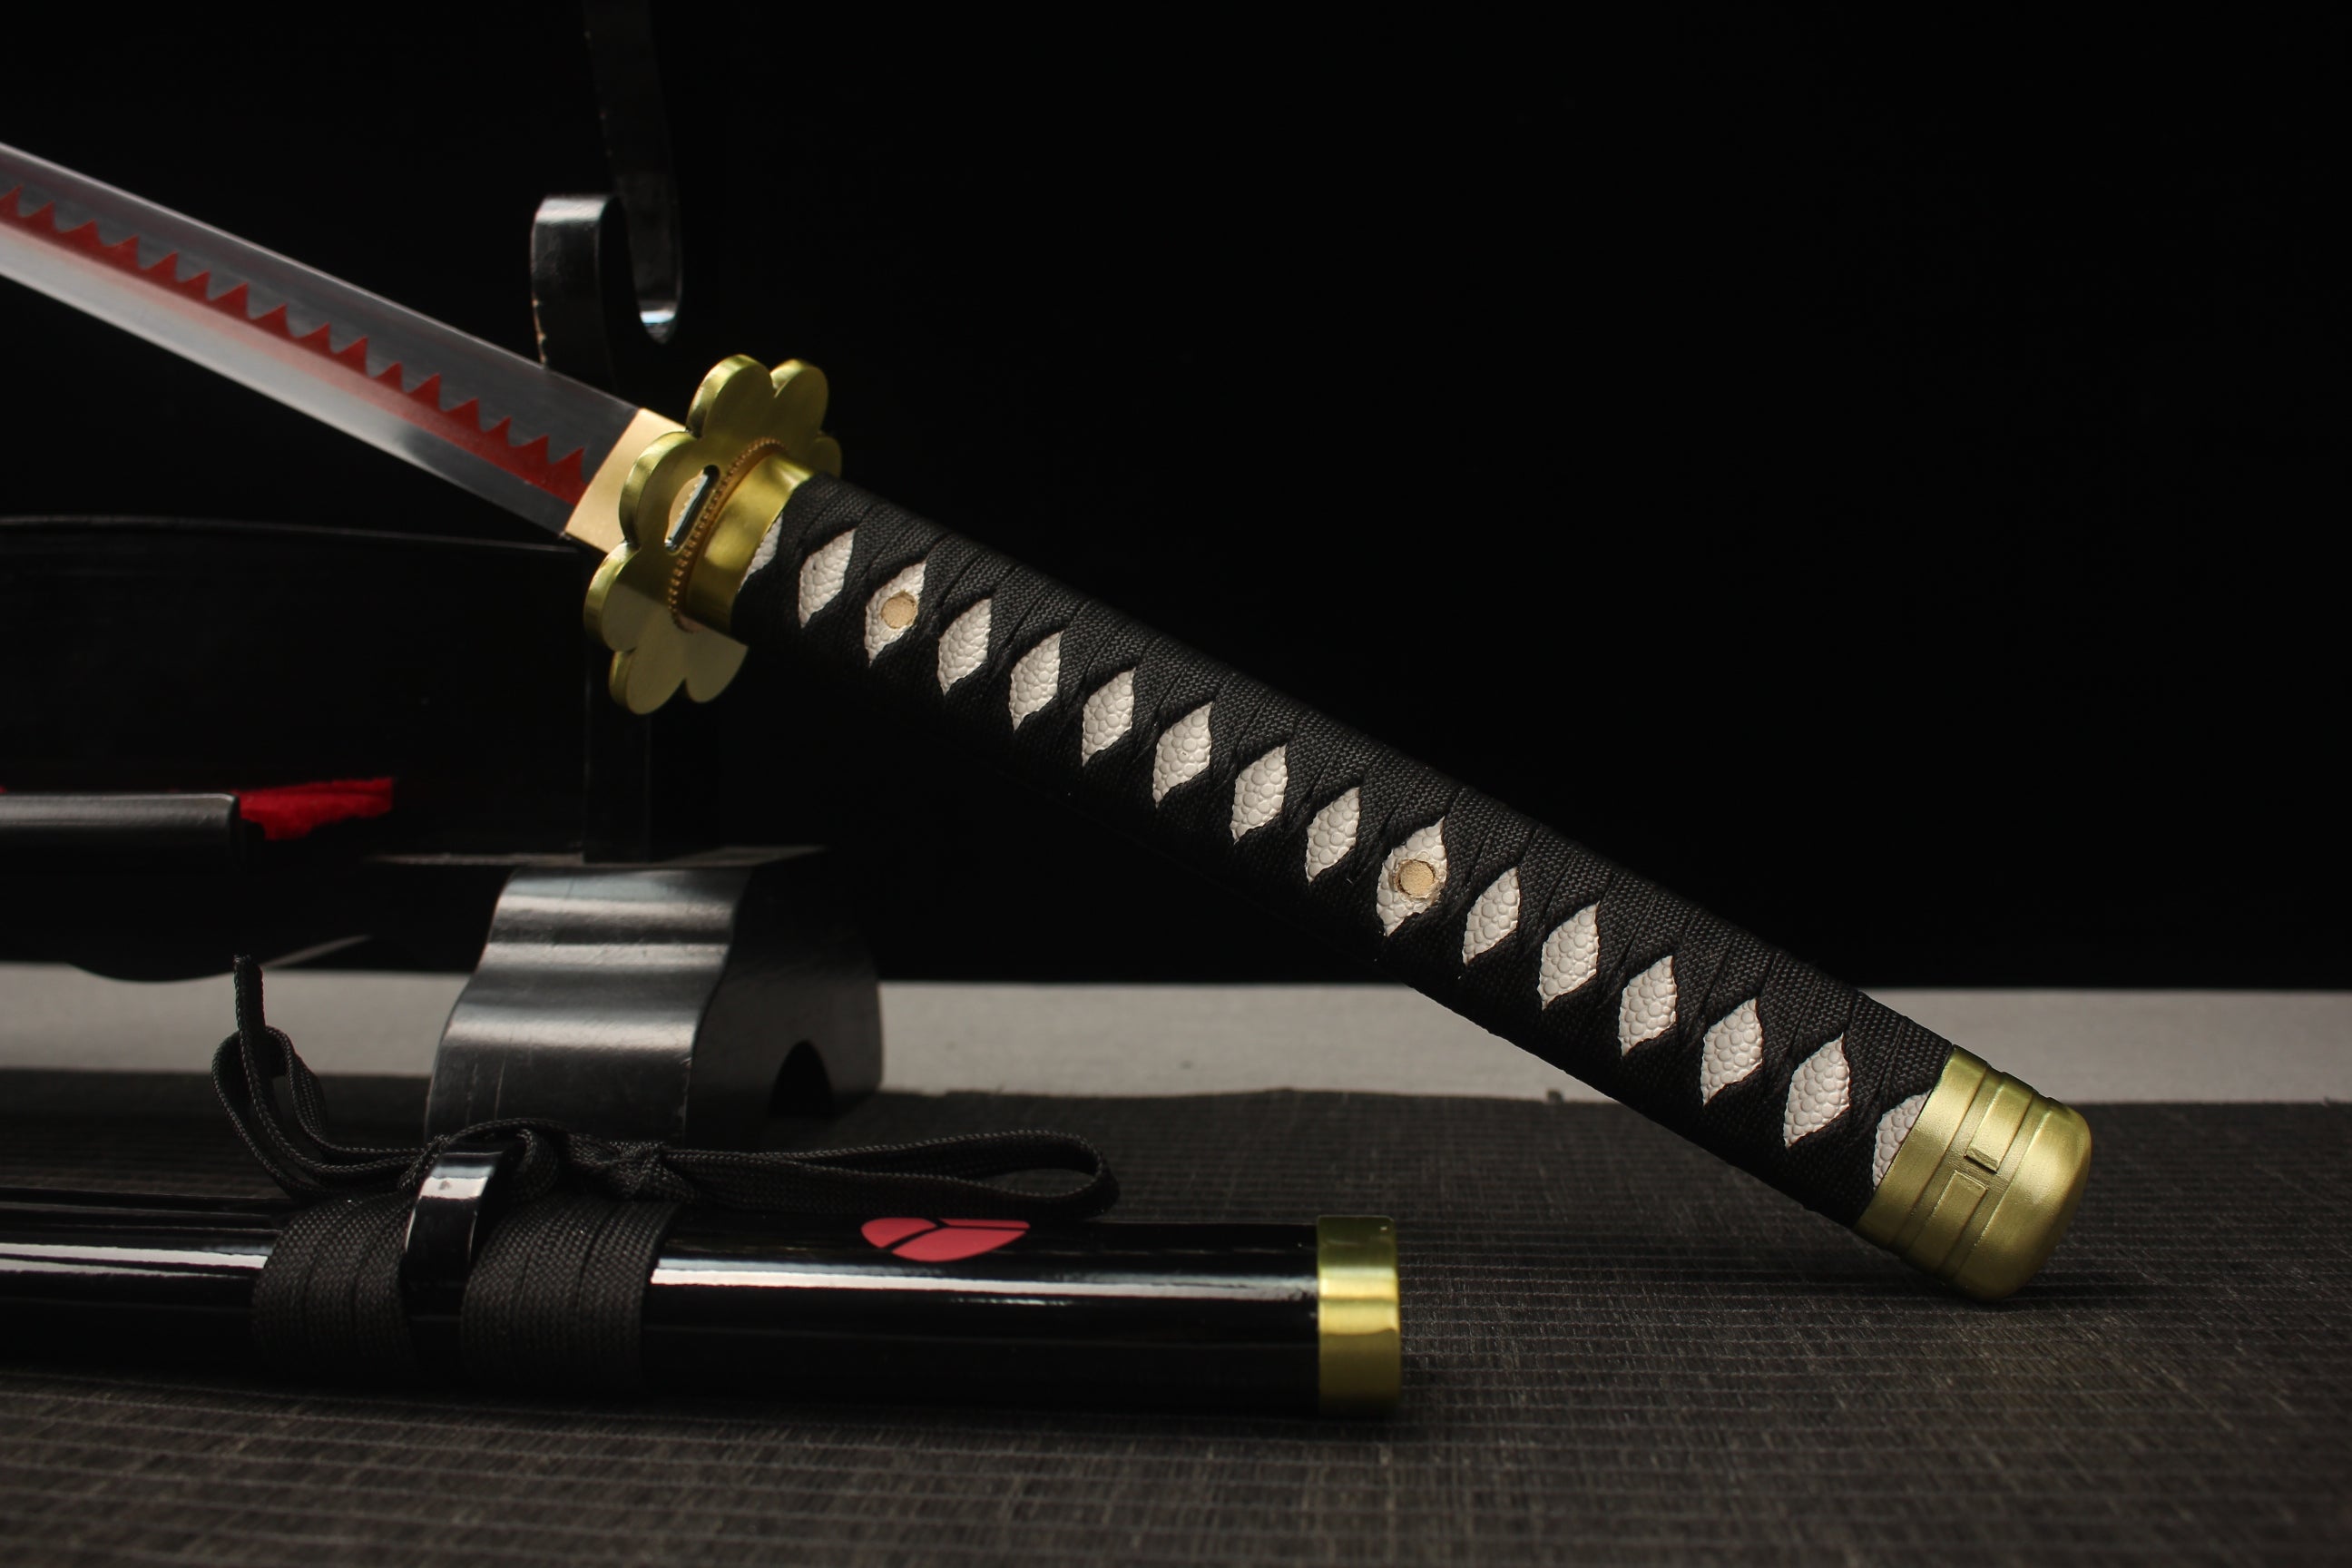 Black Sword Shusui,Anime Sword,One Piece Roronoa Zoro,Japanese Samurai Sword,Real Handmade anime Katana,High-carbon steel